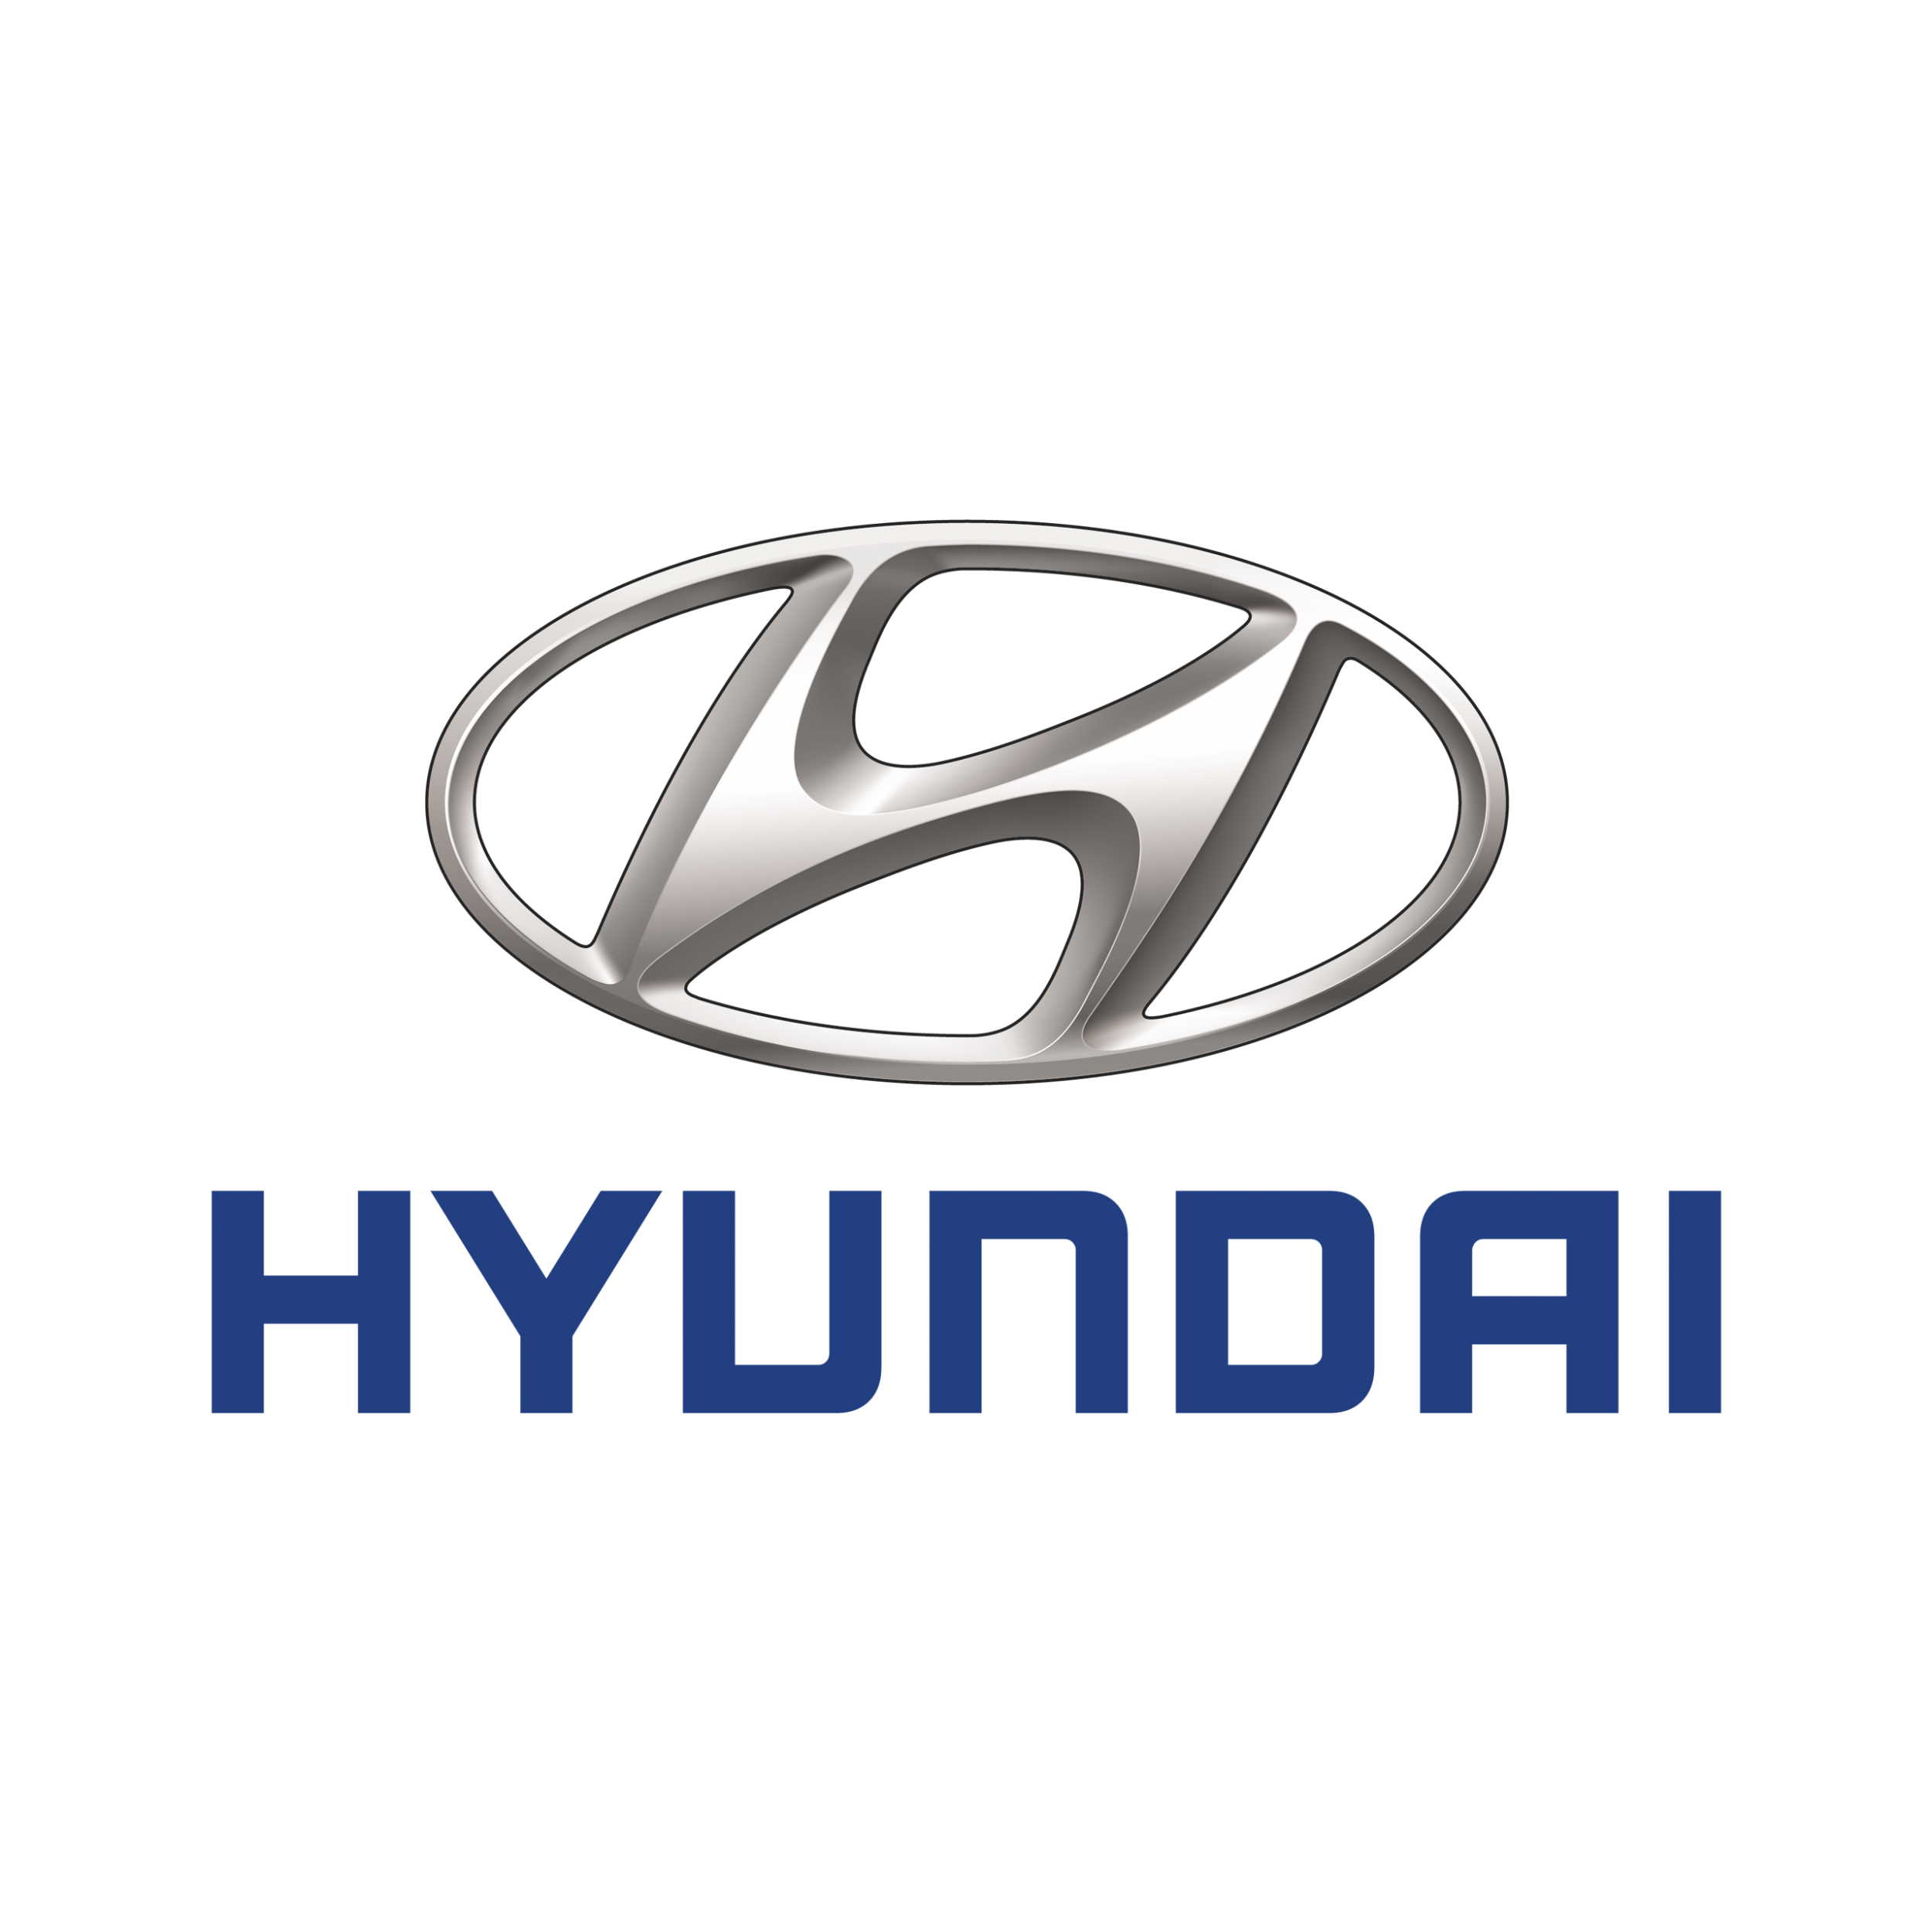 hyundai-logo-grey-2560x1440.png